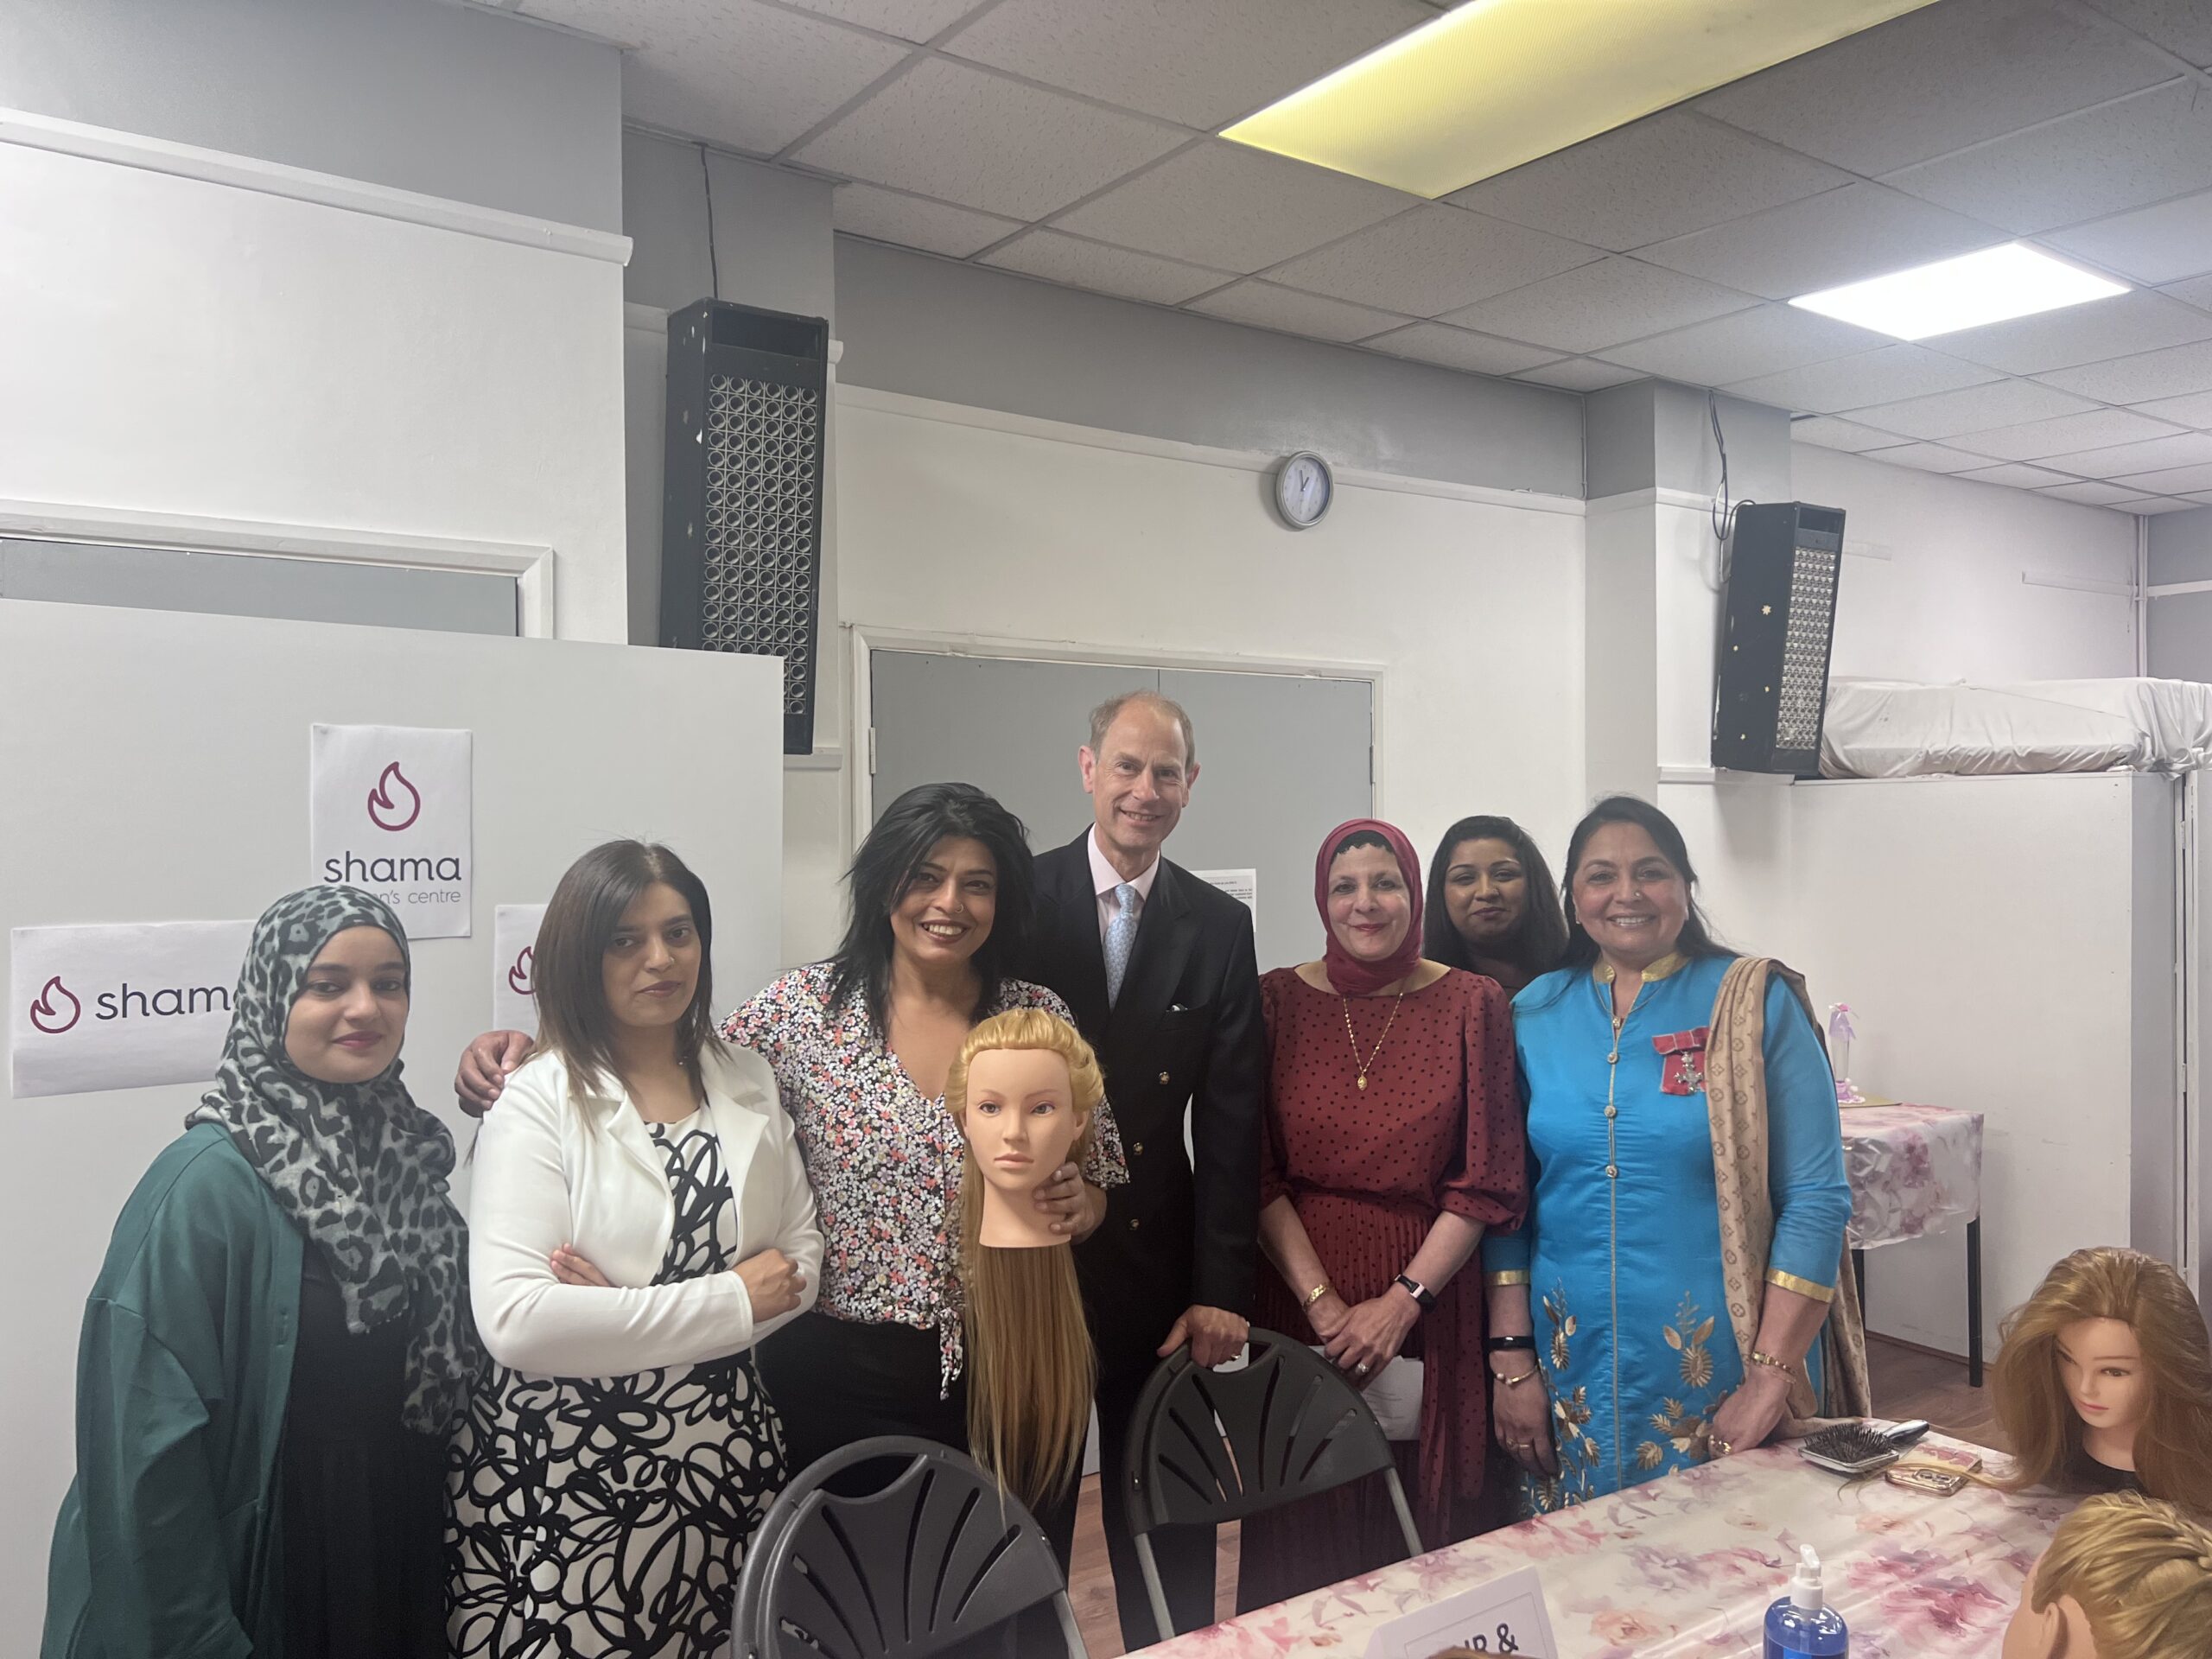 The Duke of Edinburgh visits Shama Women’s Centre